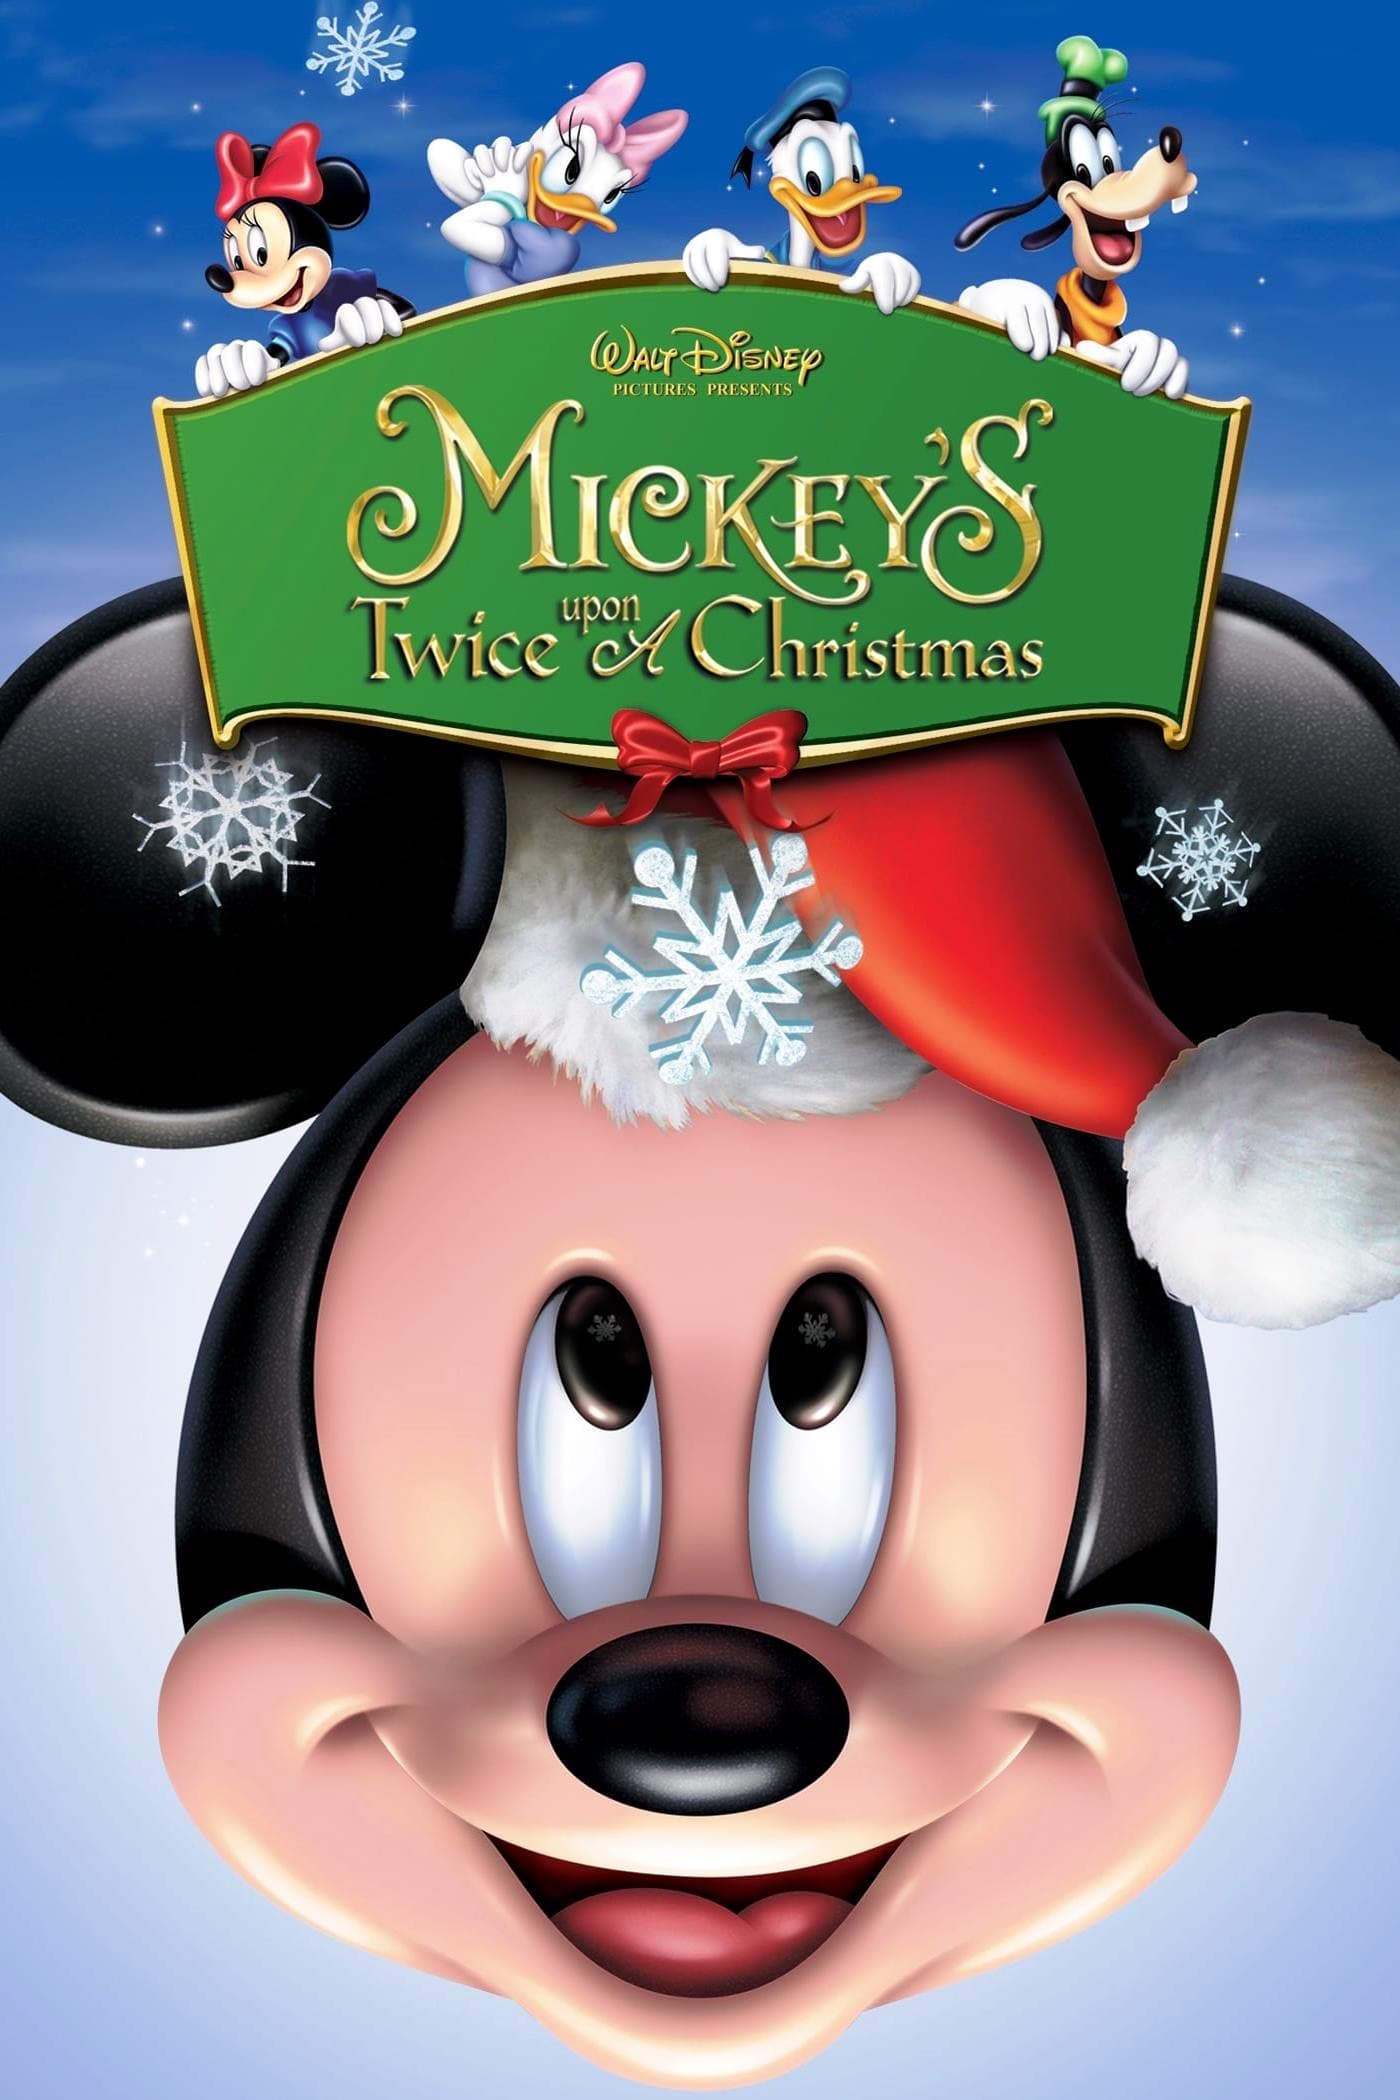 Aconteceu de Novo no Natal do Mickey (2004)